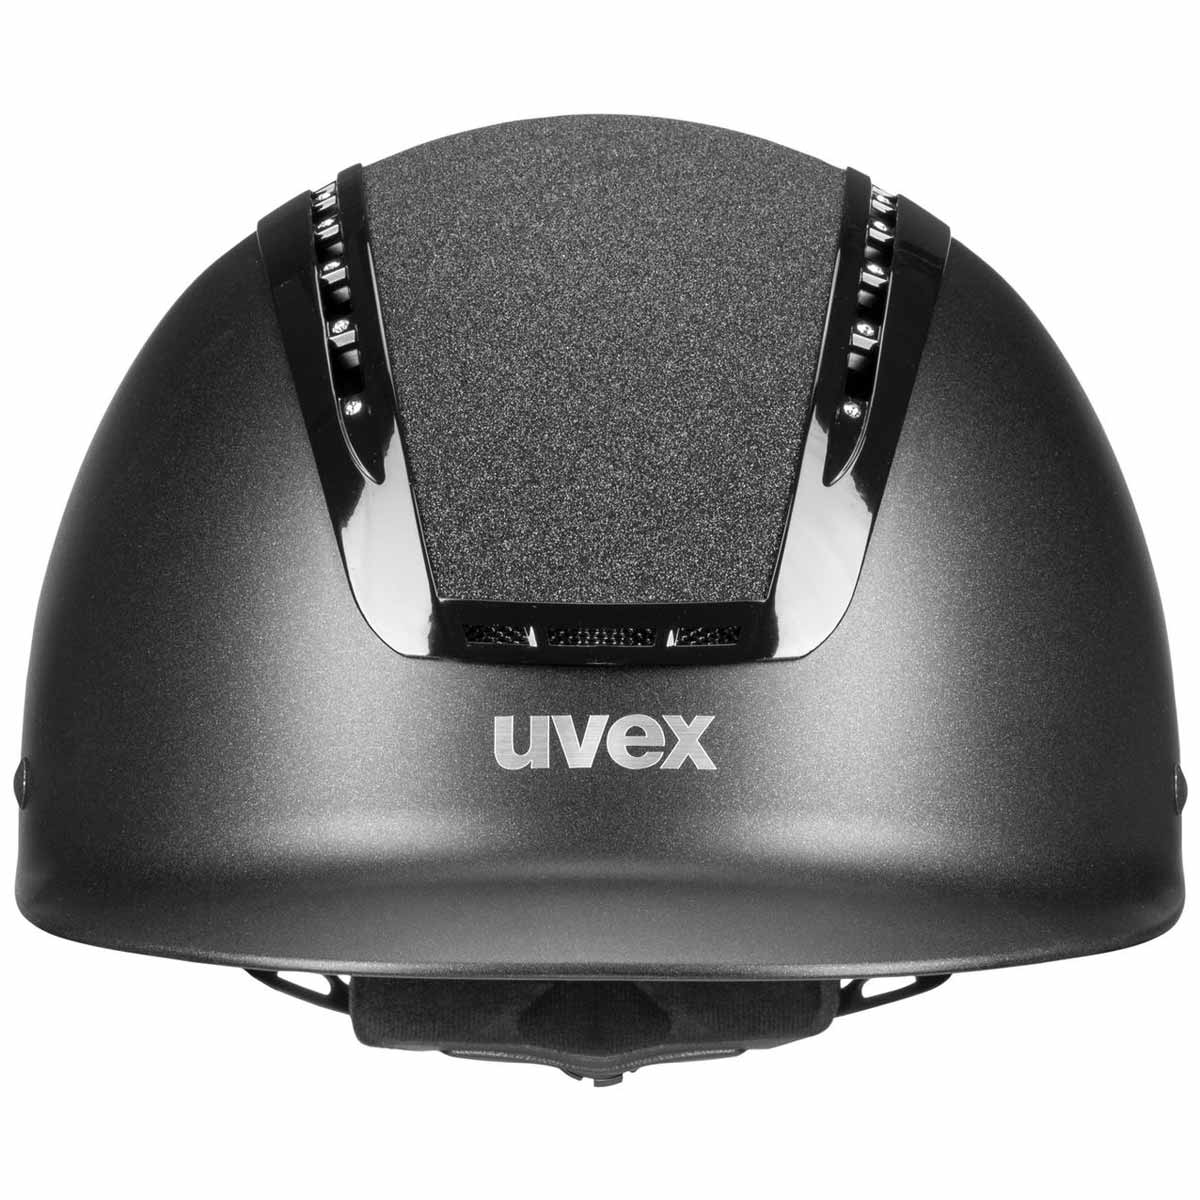 uvex suxxeed starshine riding helmet black XS/S